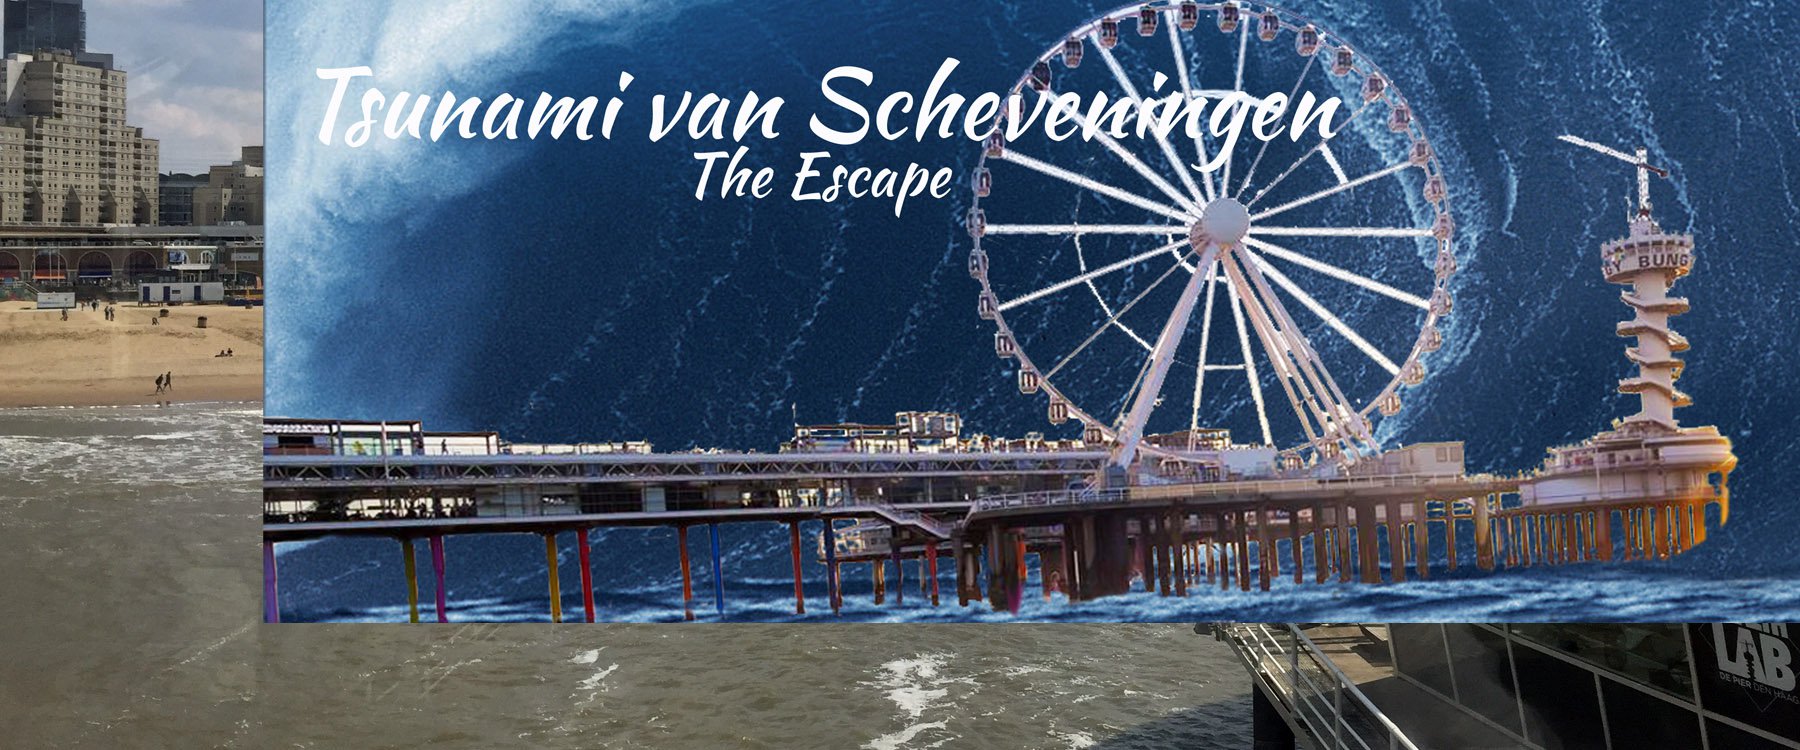 escape pier event slider 2.jpg